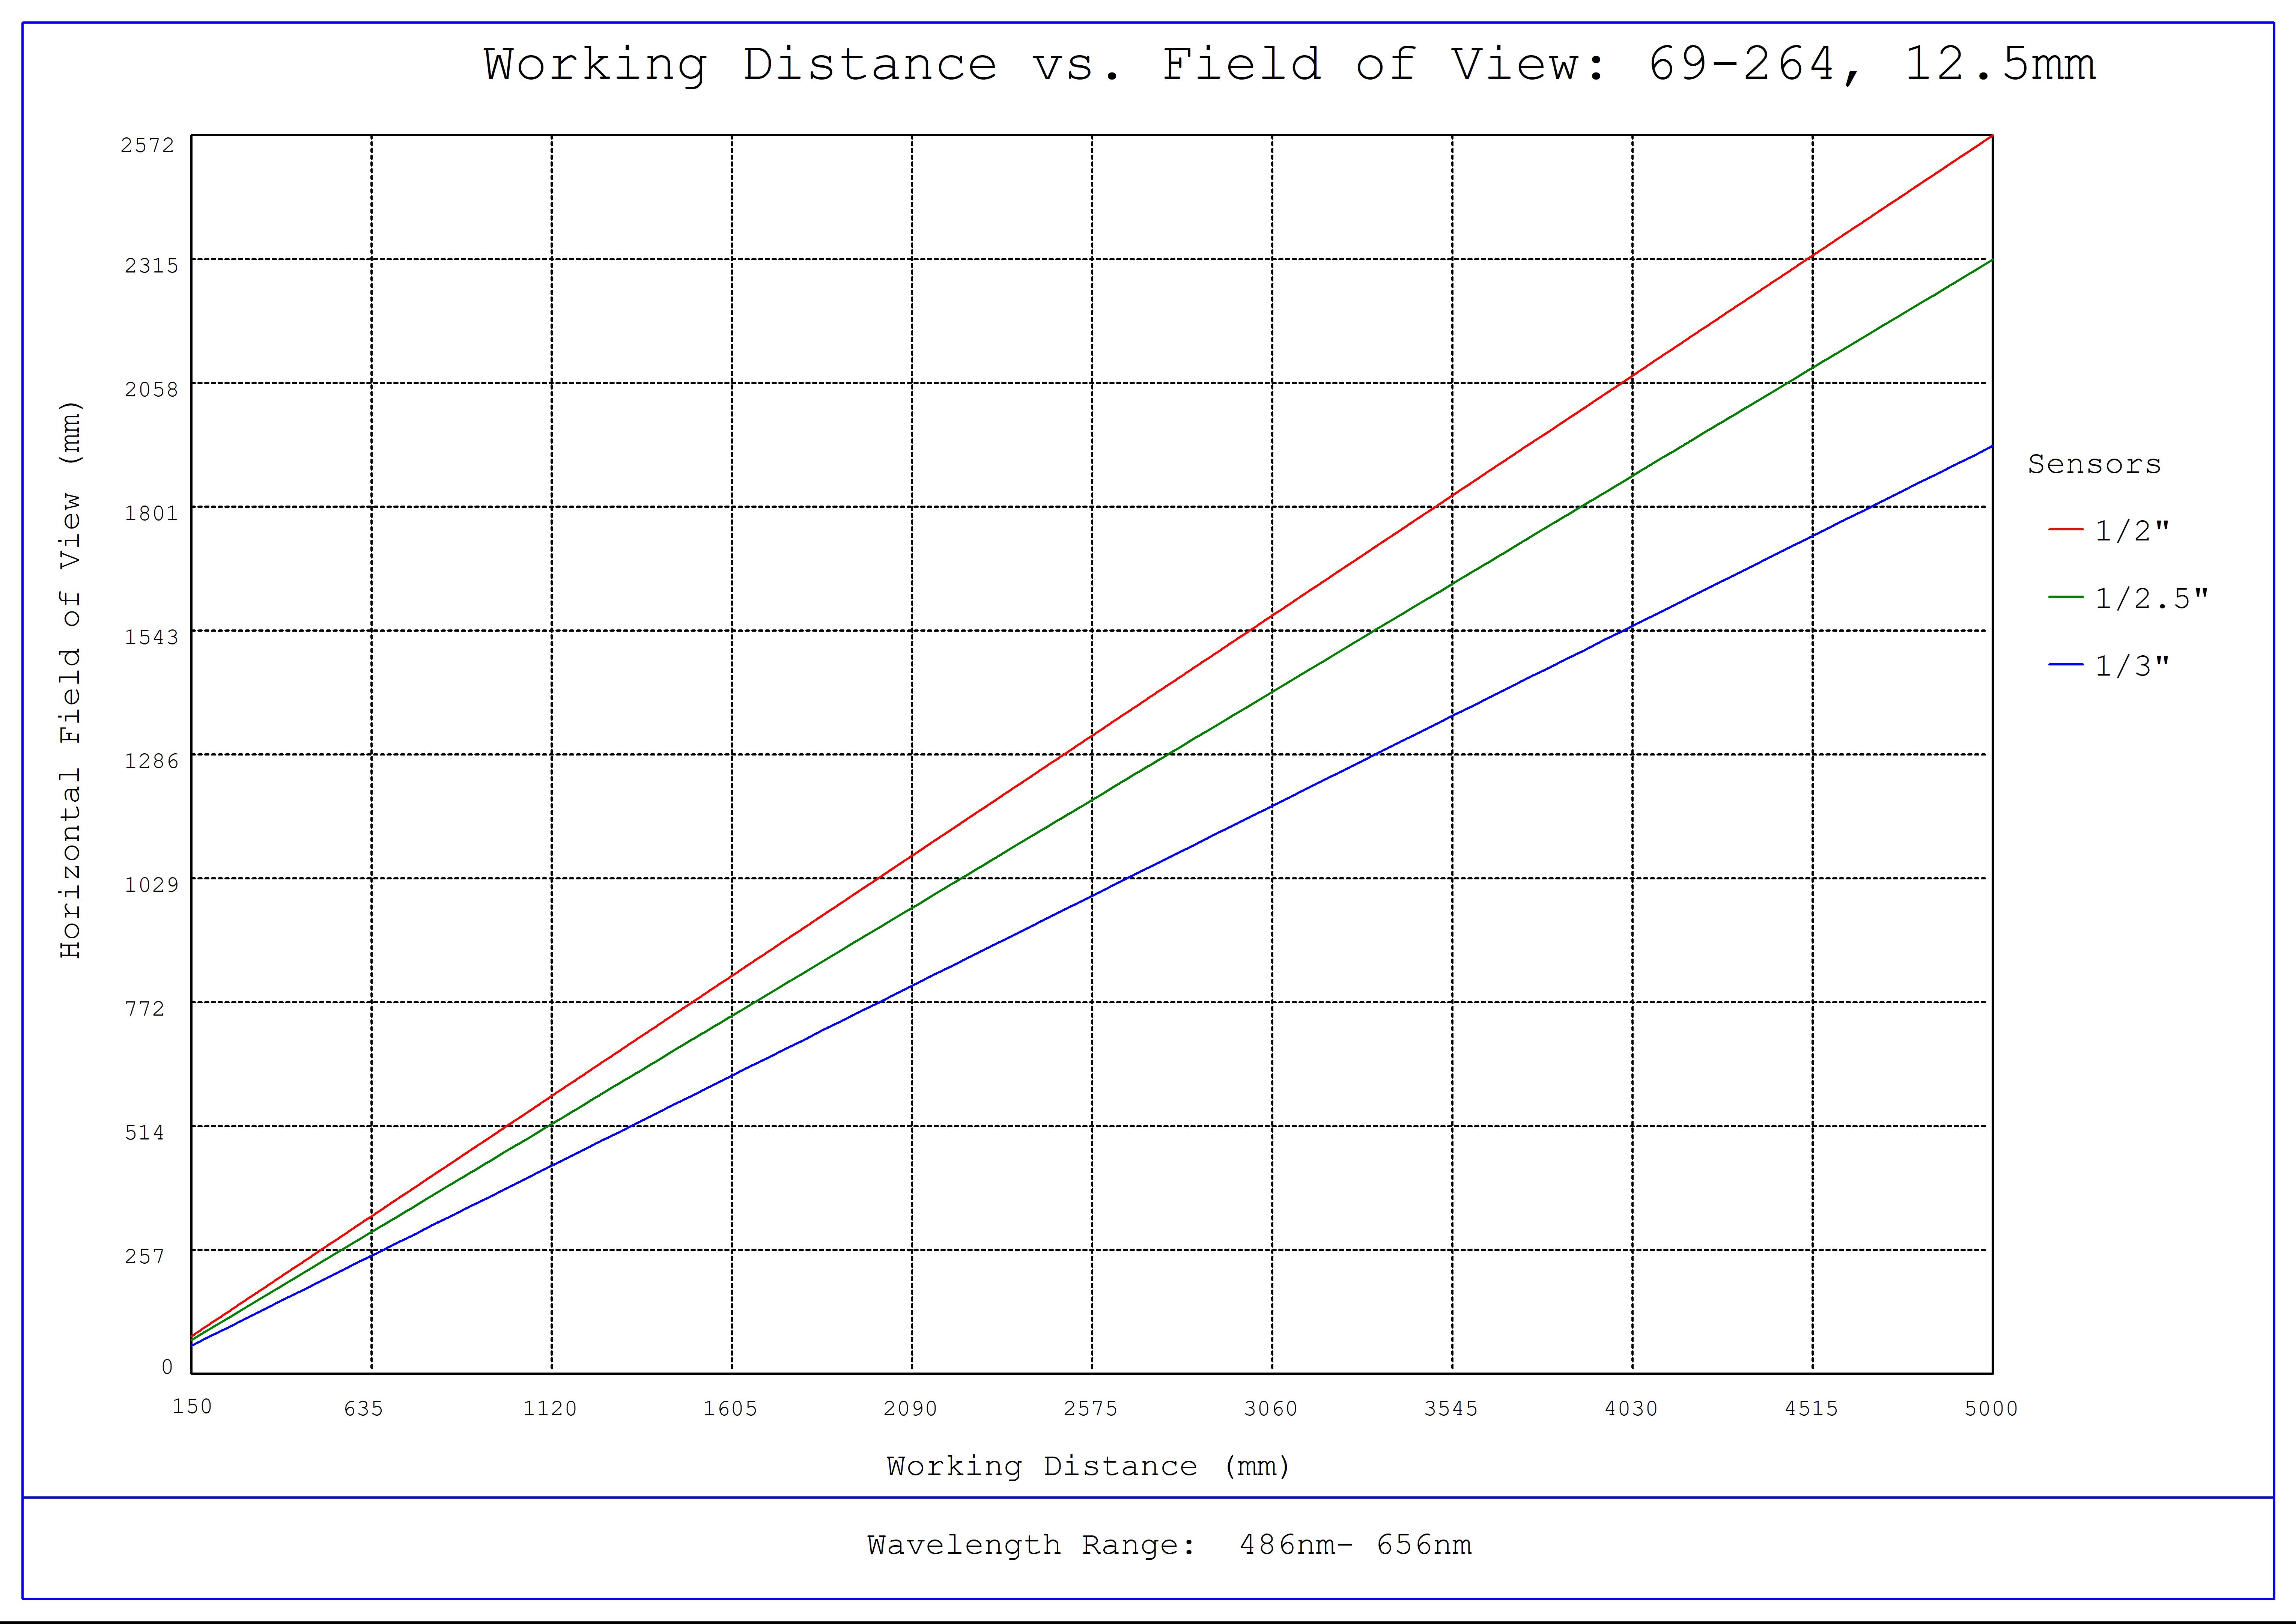 #69-264, 12.5mm FL f/4, Blue Series M12 Lens, Working Distance versus Field of View Plot